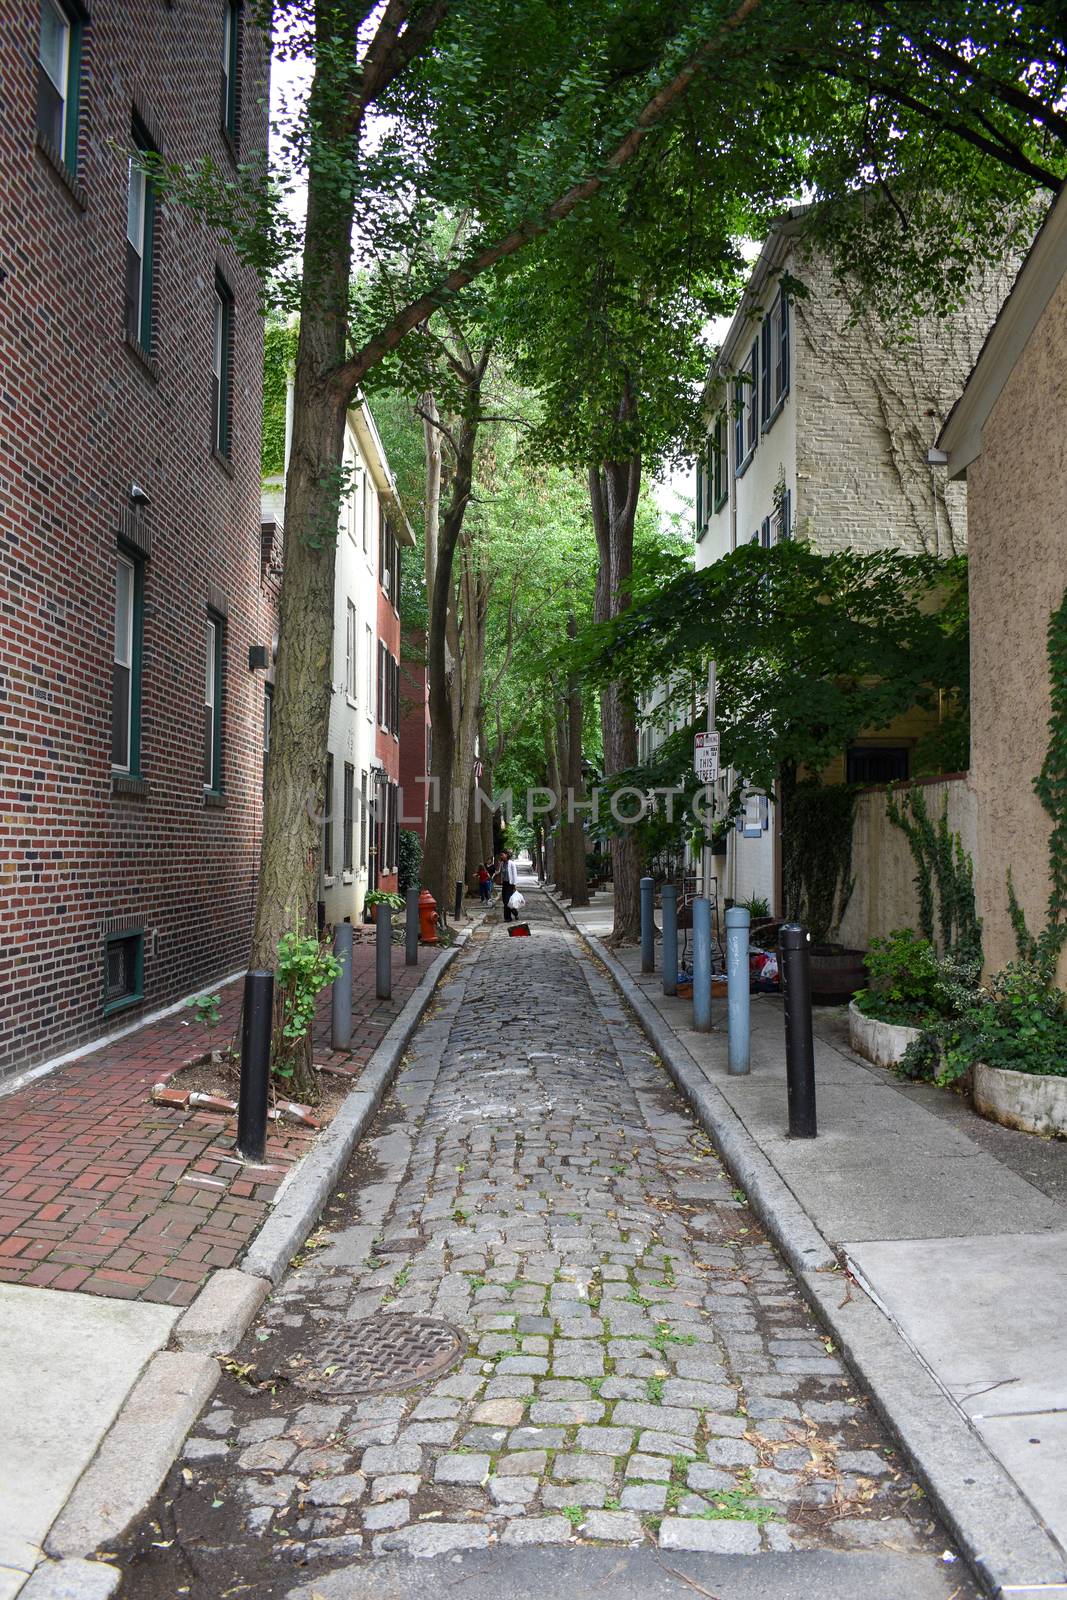 A Cobblestone Alleyway in the City of Philadelphia by bju12290